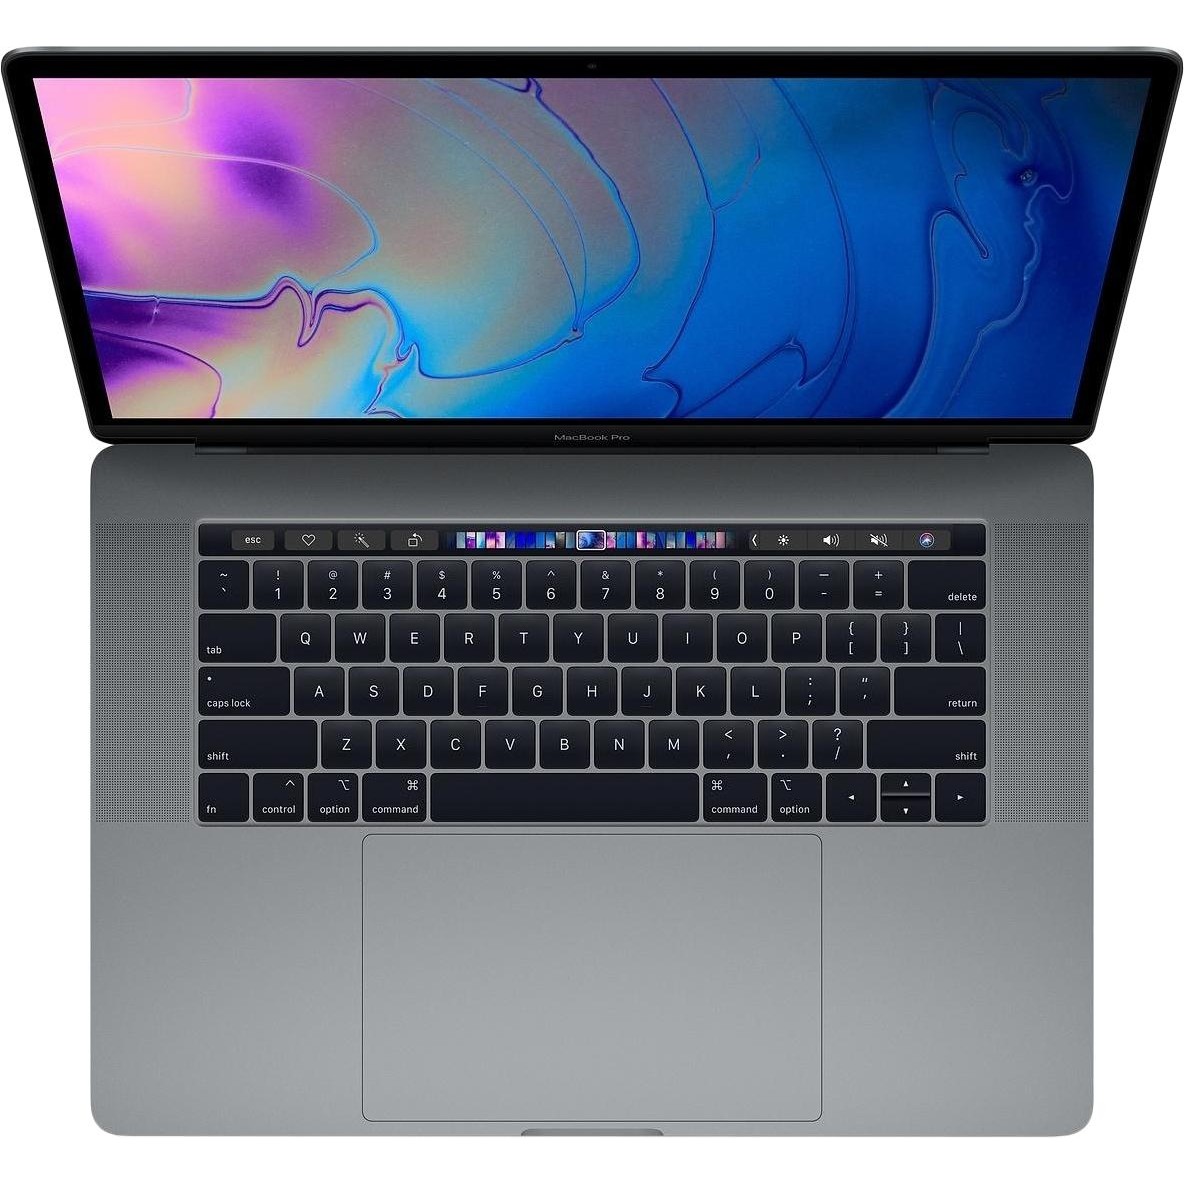 Apple MacBook Pro 15" Space Gray 2018 (MR932, 5R932) - зображення 1